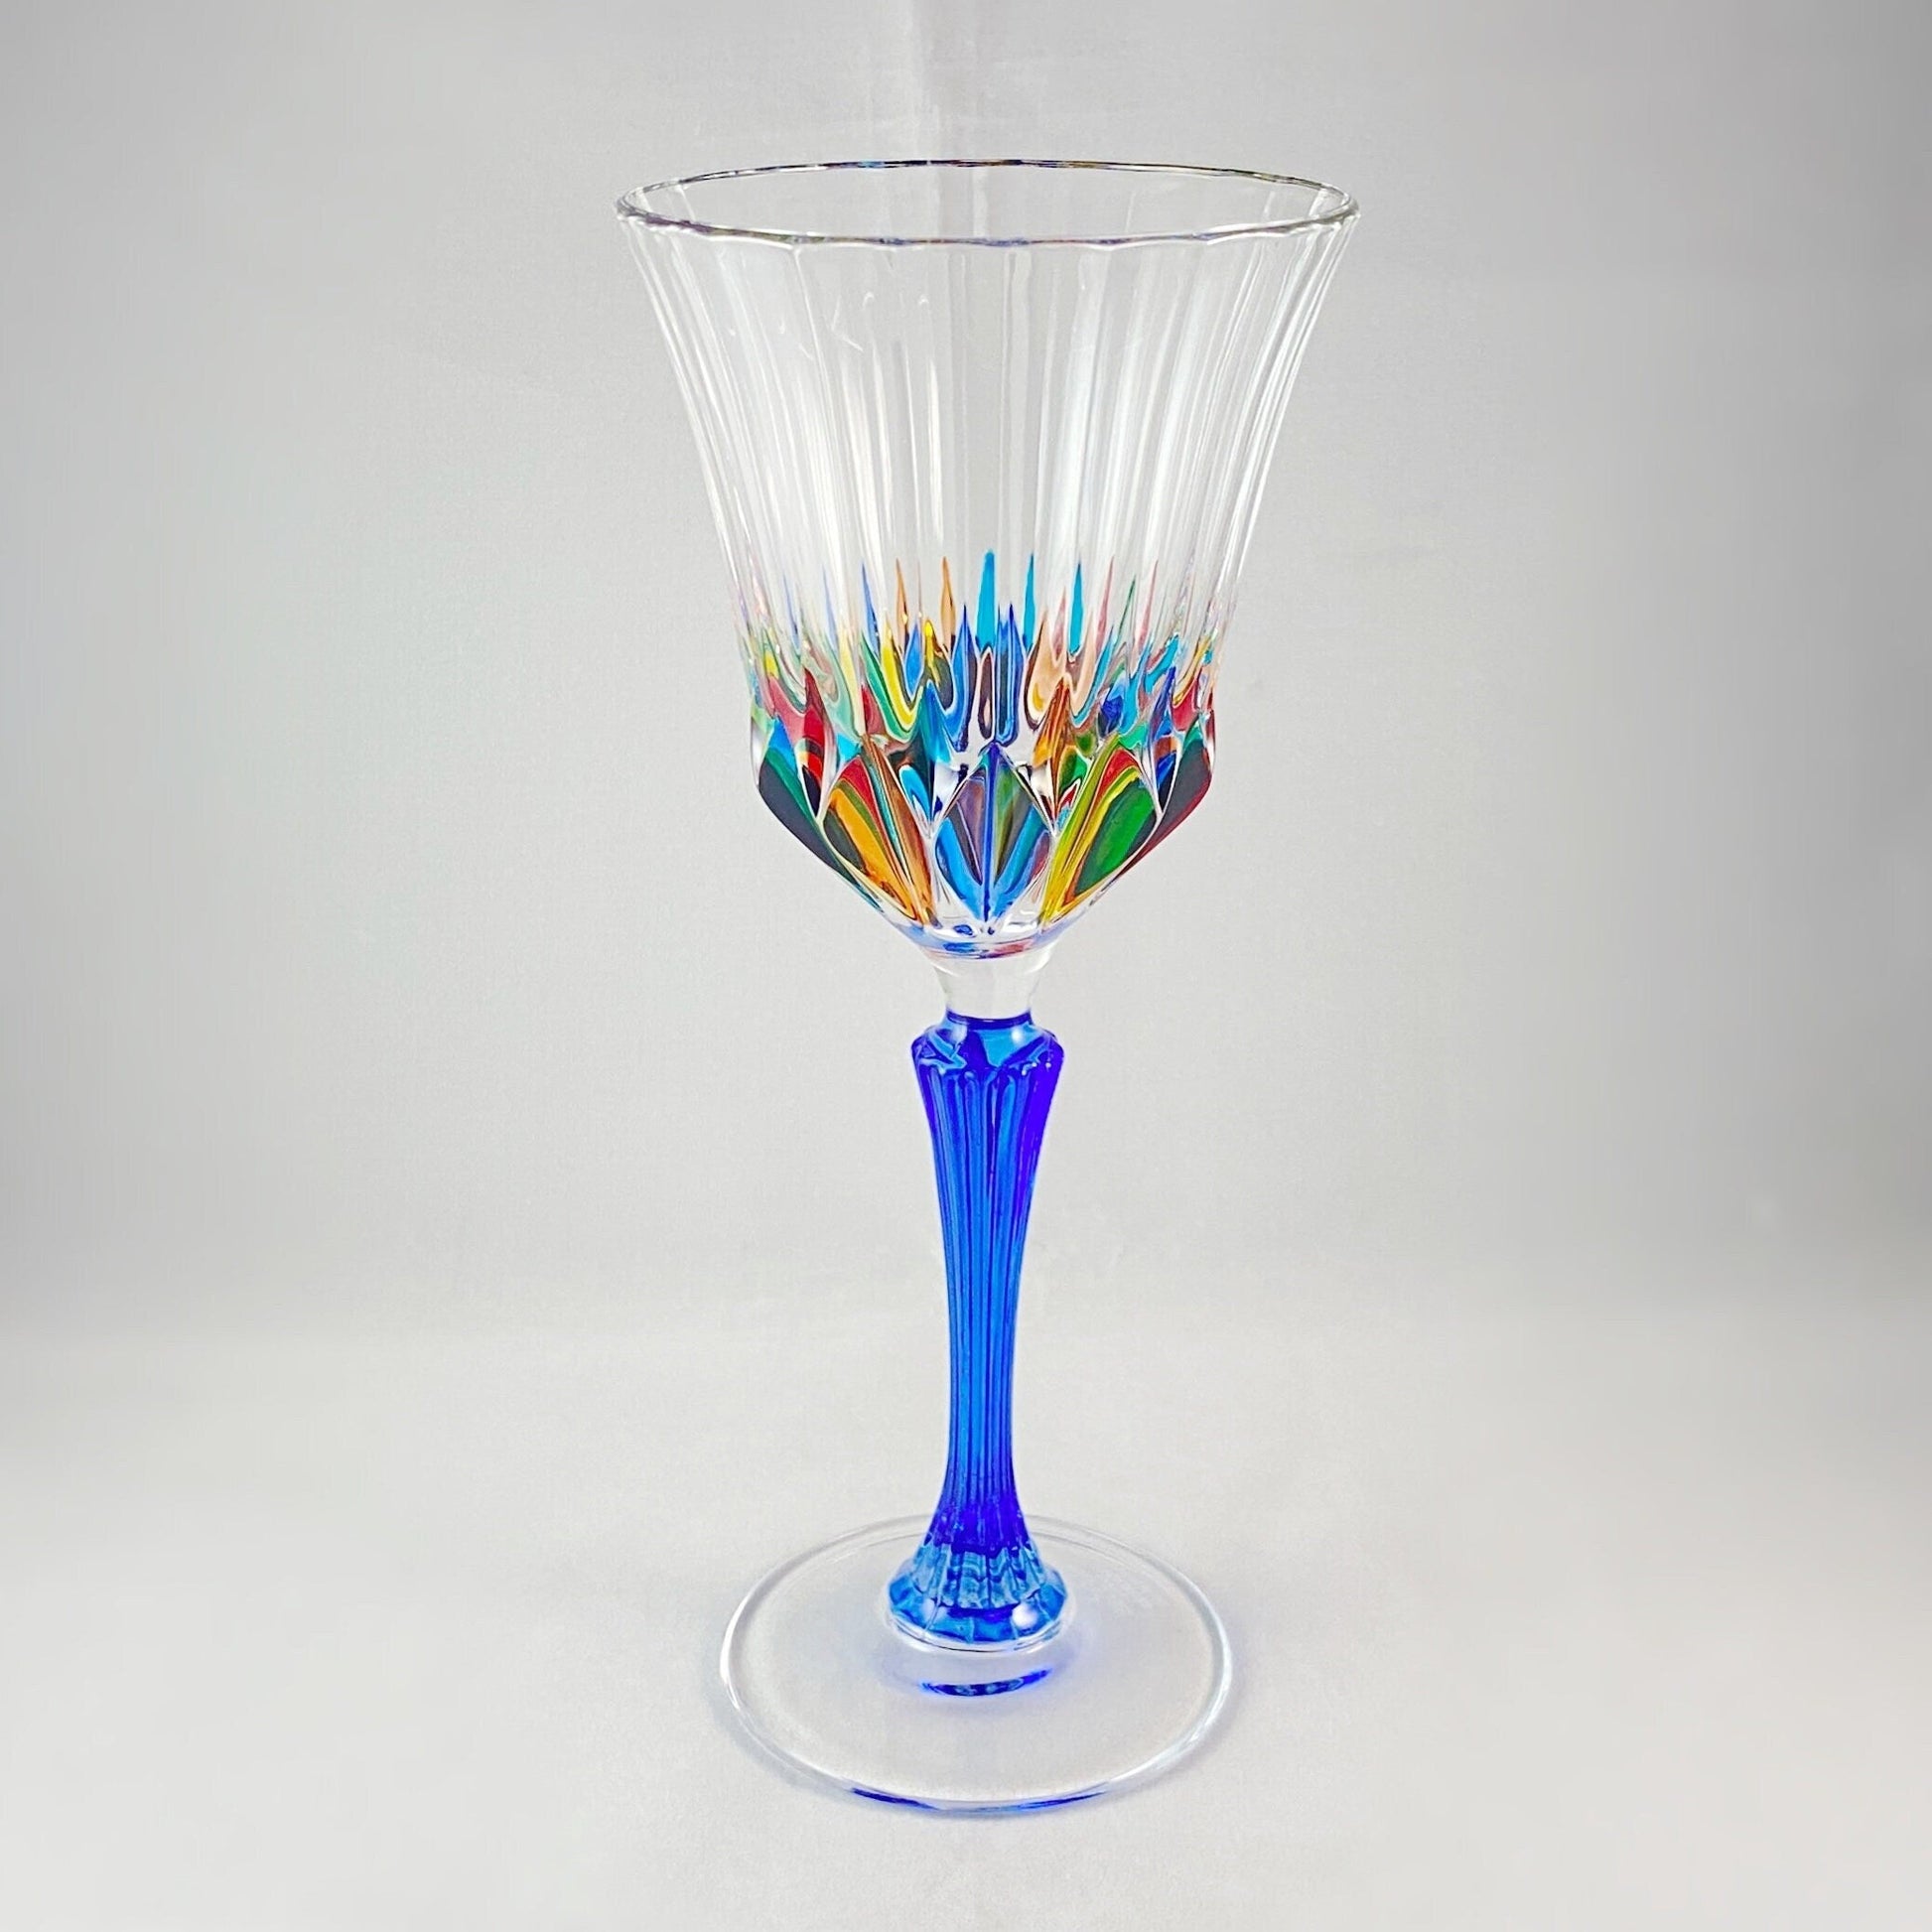 Blue Stem Venetian Glass Adagio Clarity Wine Glass - Handmade in Italy, Colorful Murano Glass